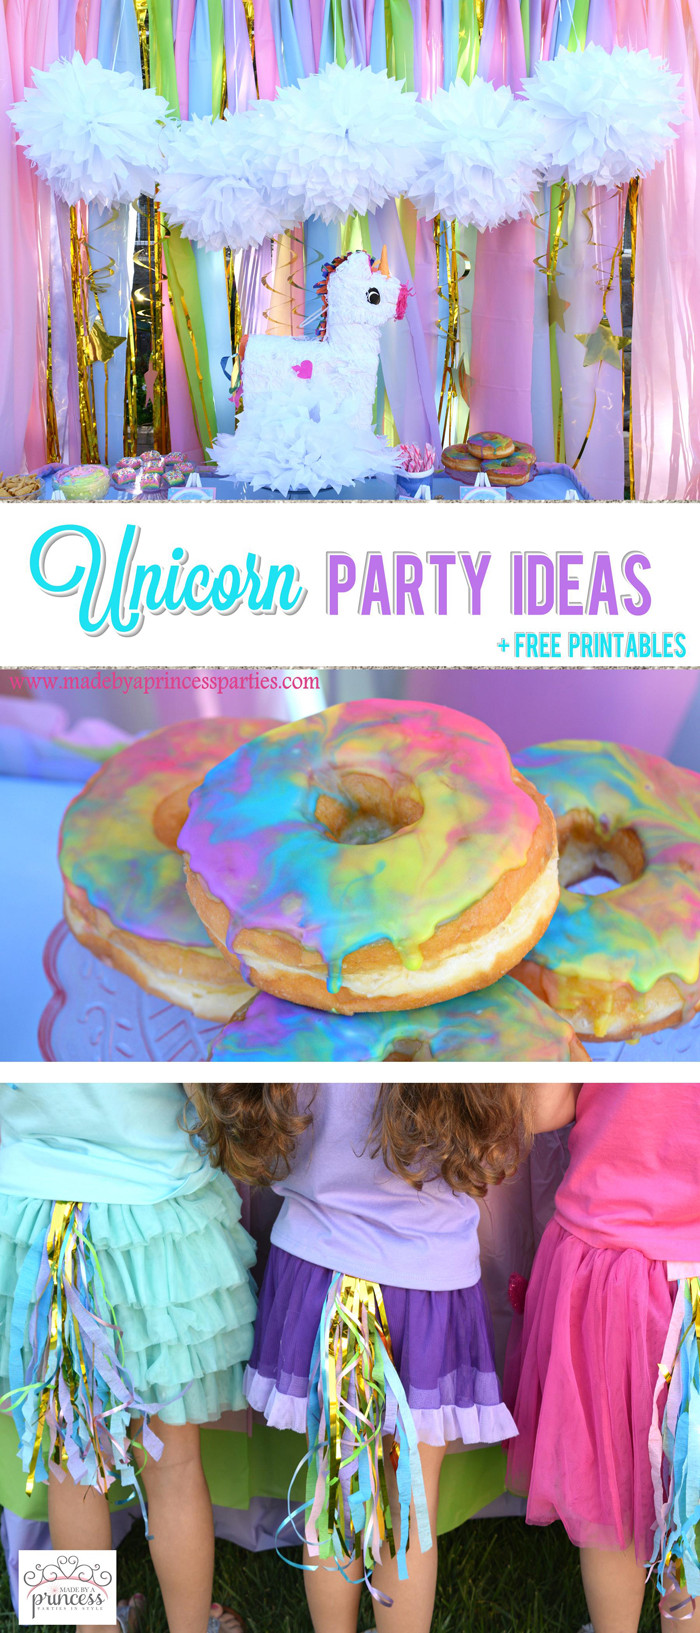 Unicorn Food Party Favor Ideas
 Unicorn Party Ideas Free Printables